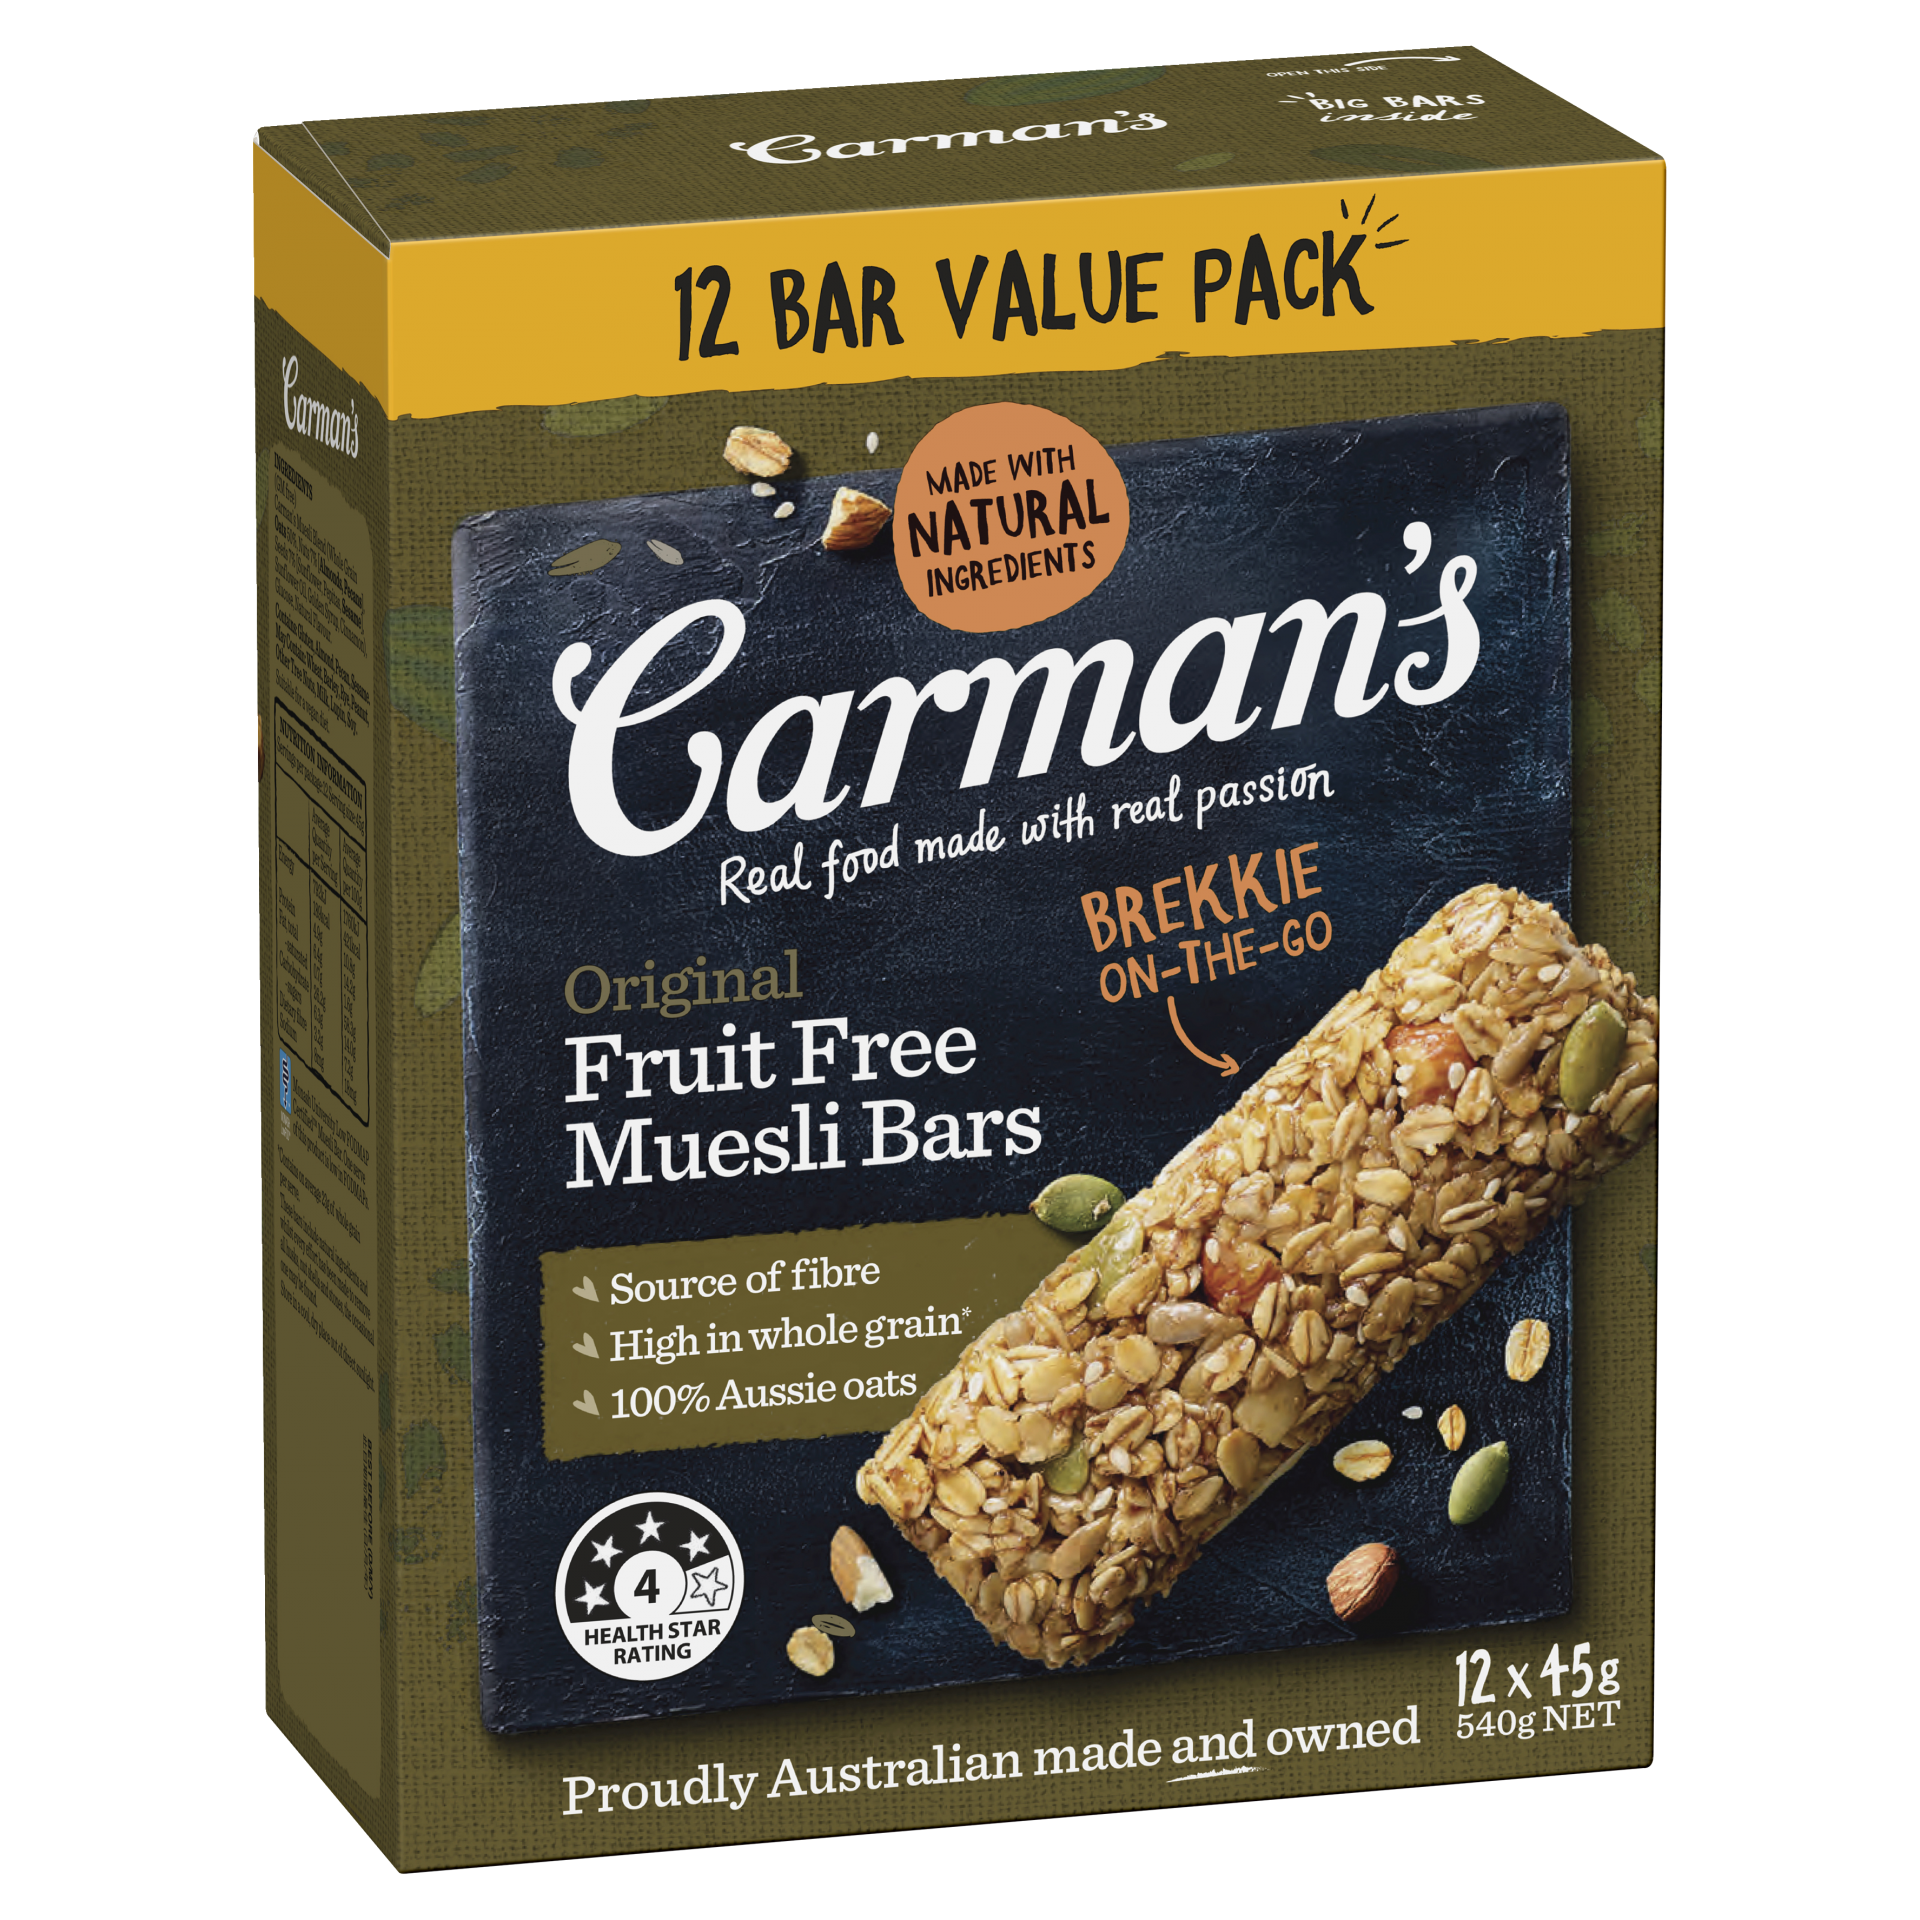 Carman’s Original Fruit Free Value Pack